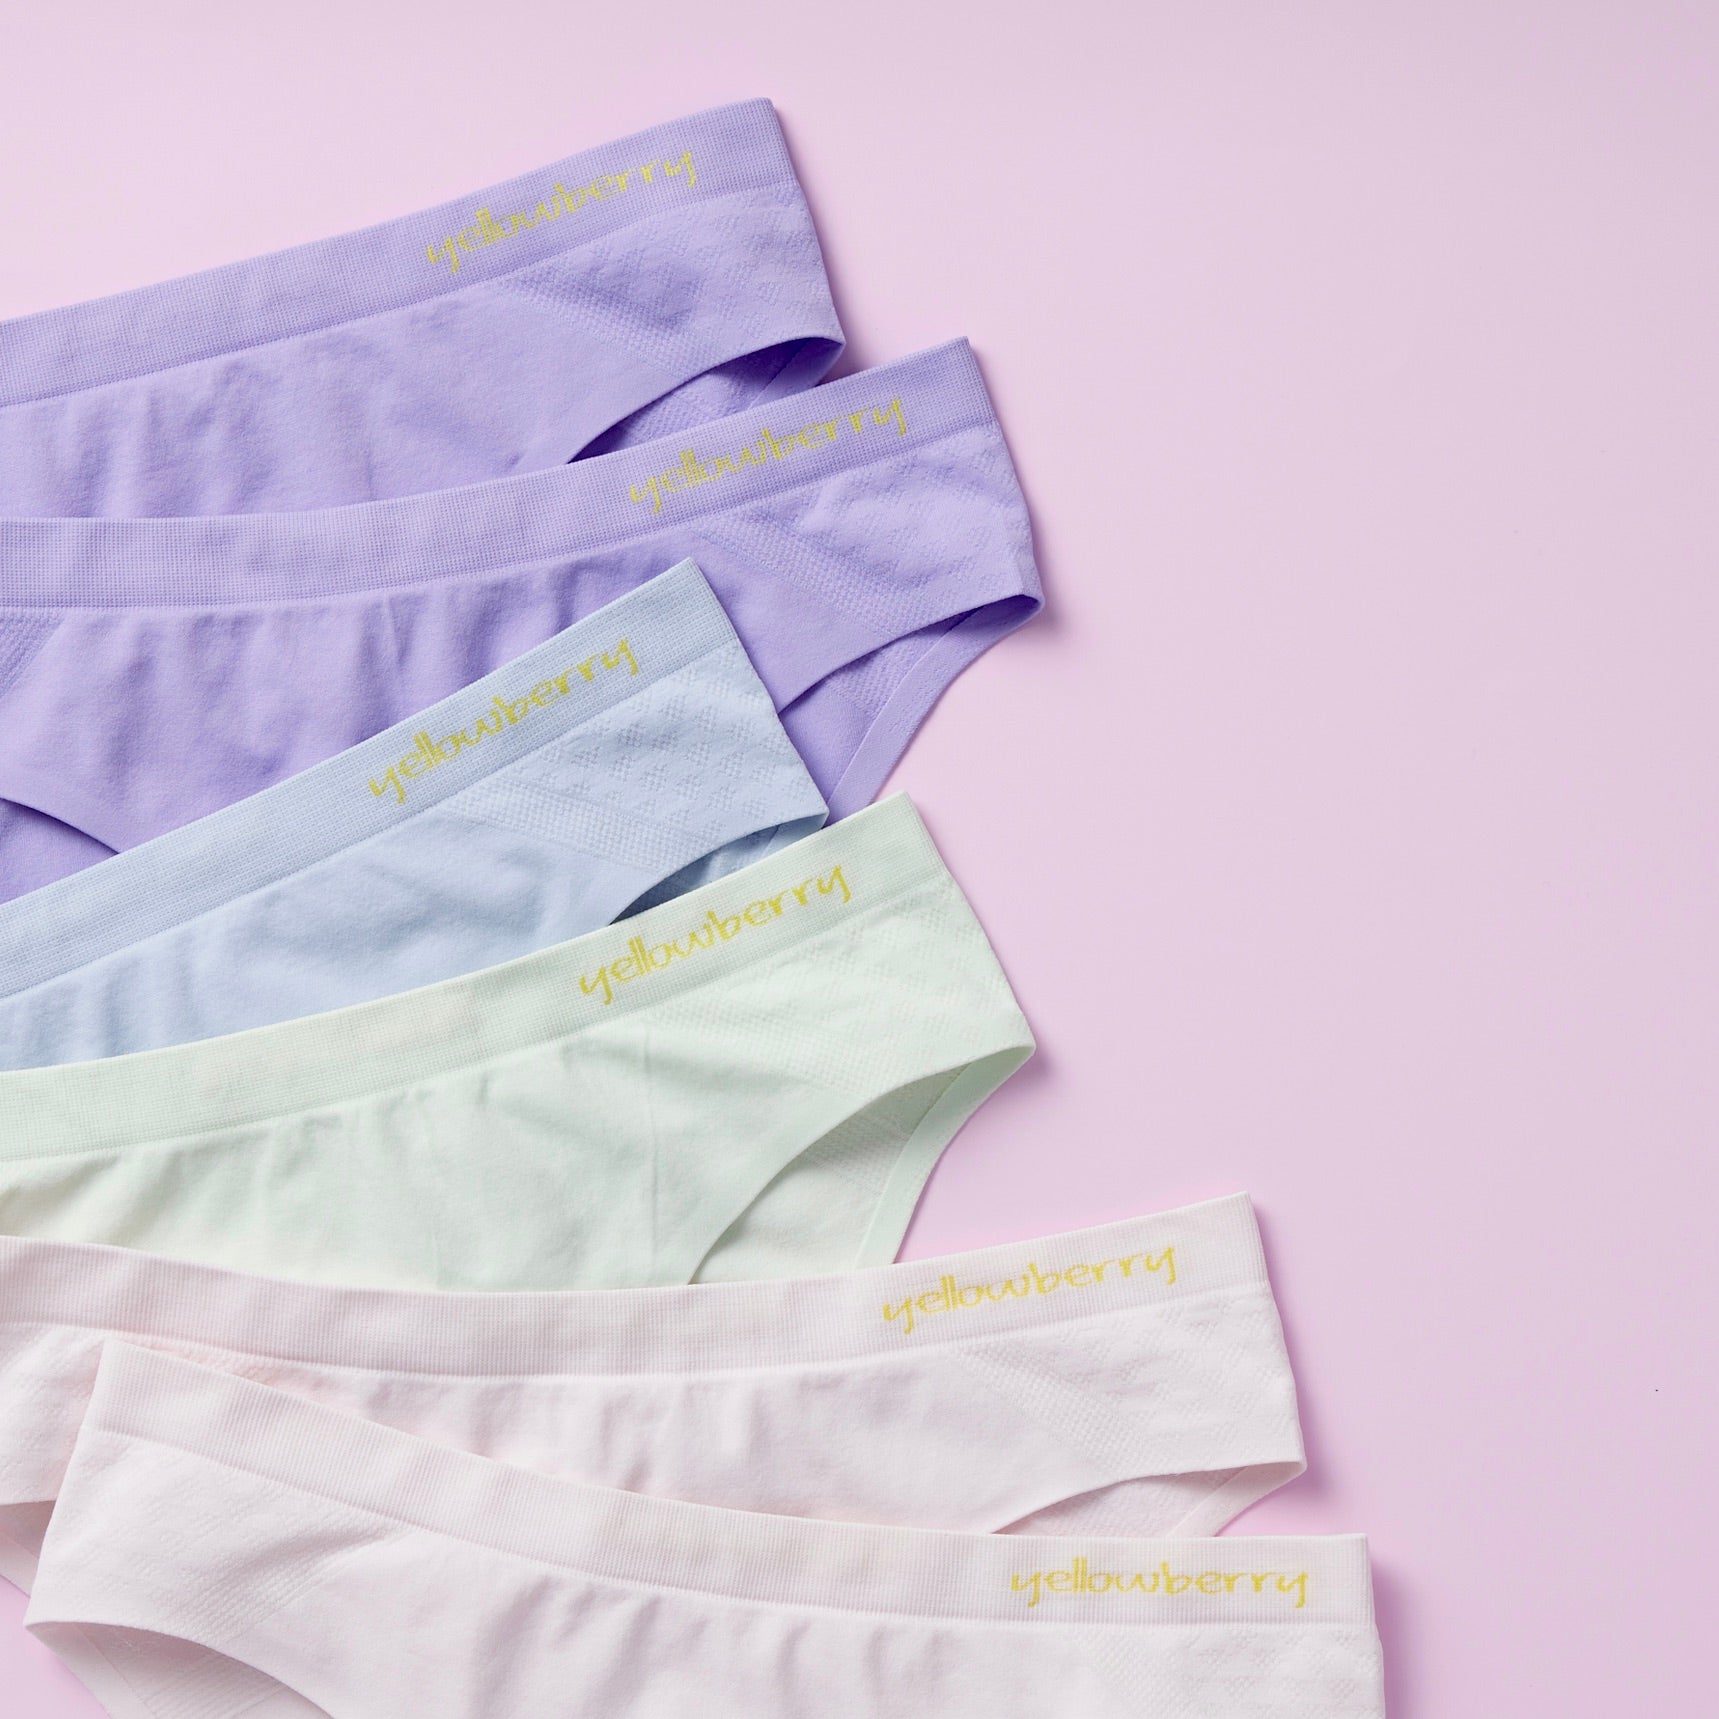 Women's Underwear & Panties, Seamless Underwear